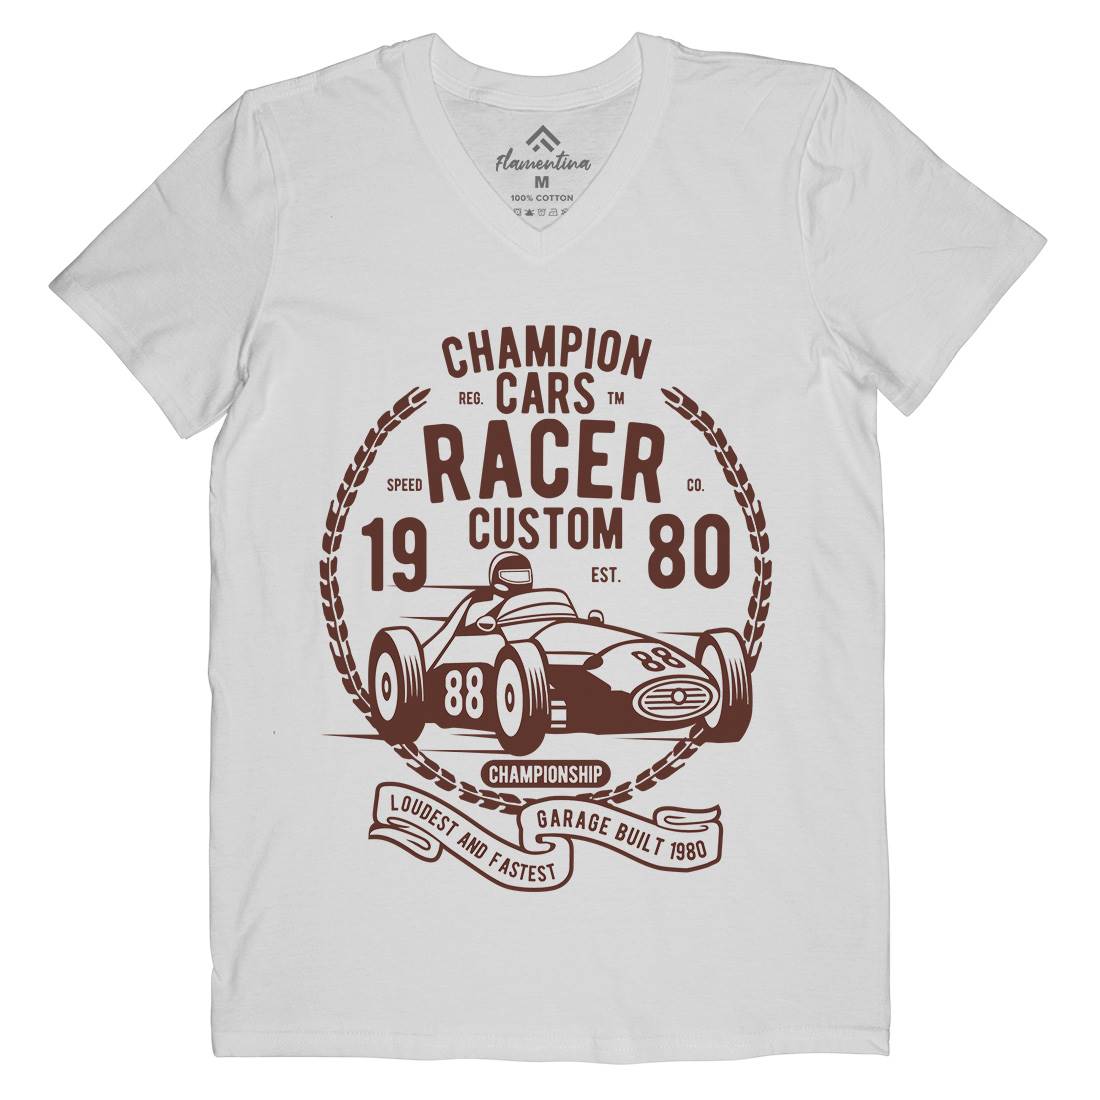 Champion Cars Racer Mens Organic V-Neck T-Shirt Cars B395